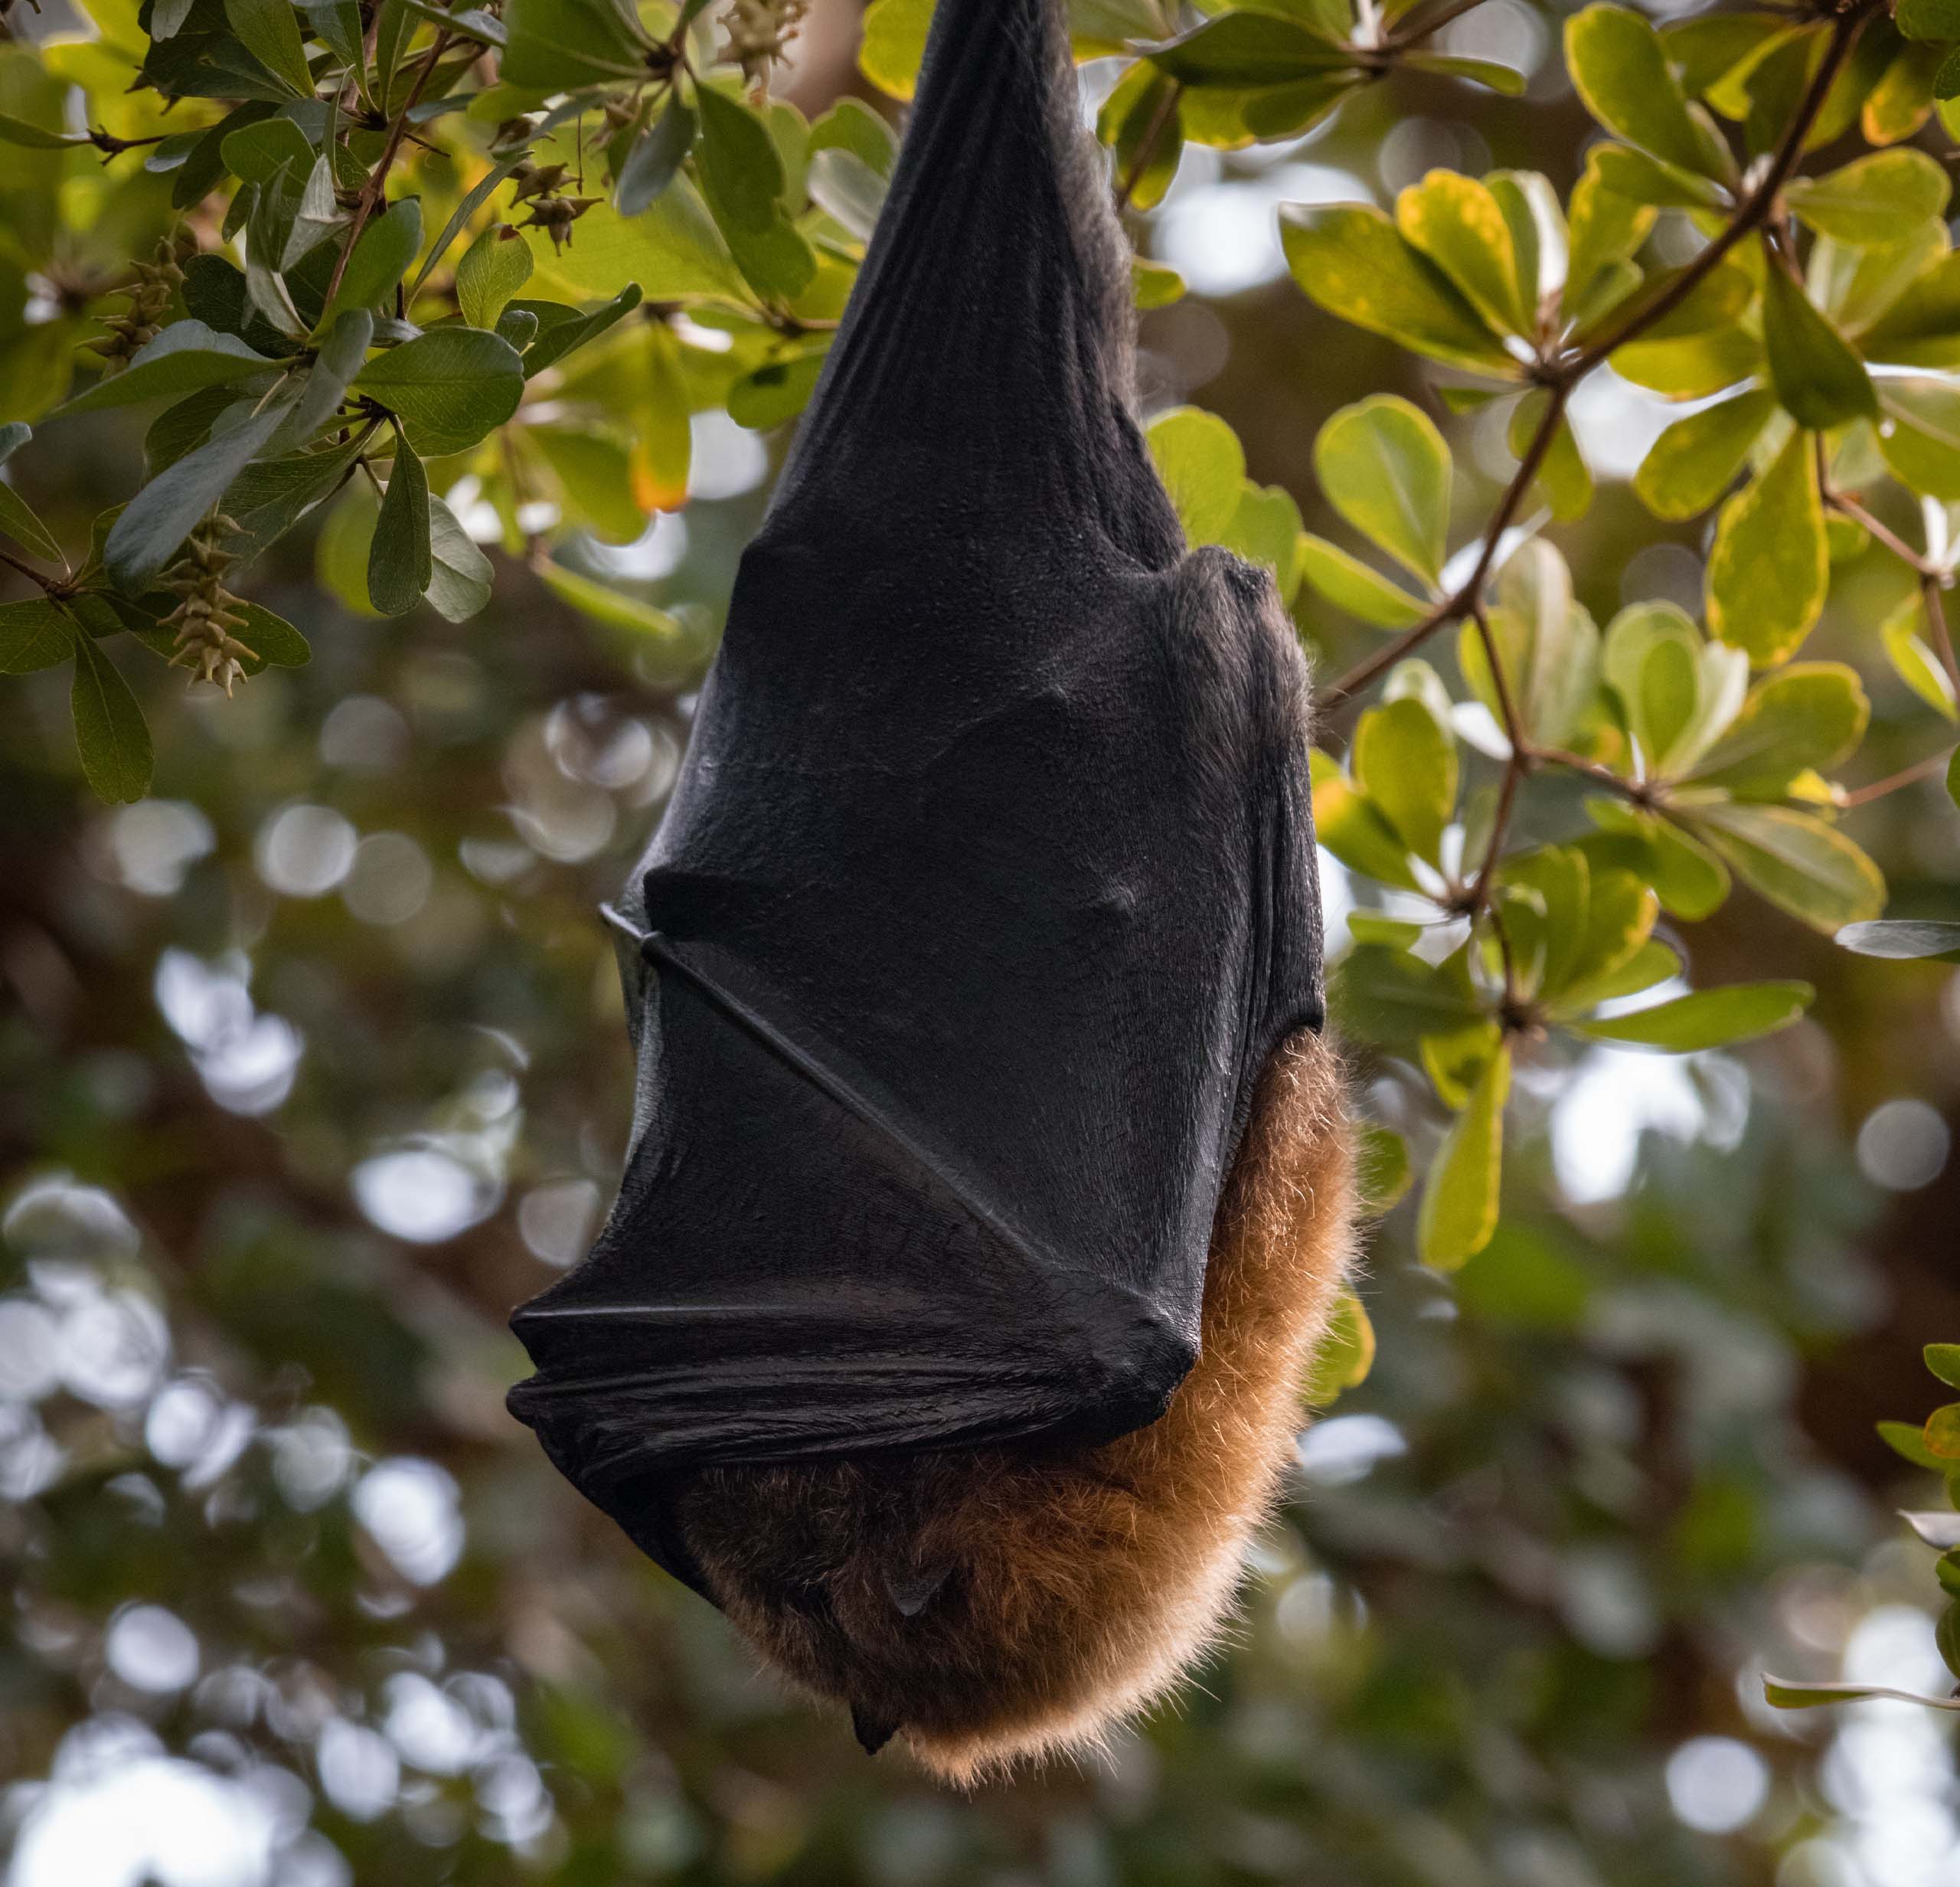 Bat sleeping as it hangs upside down in a tree